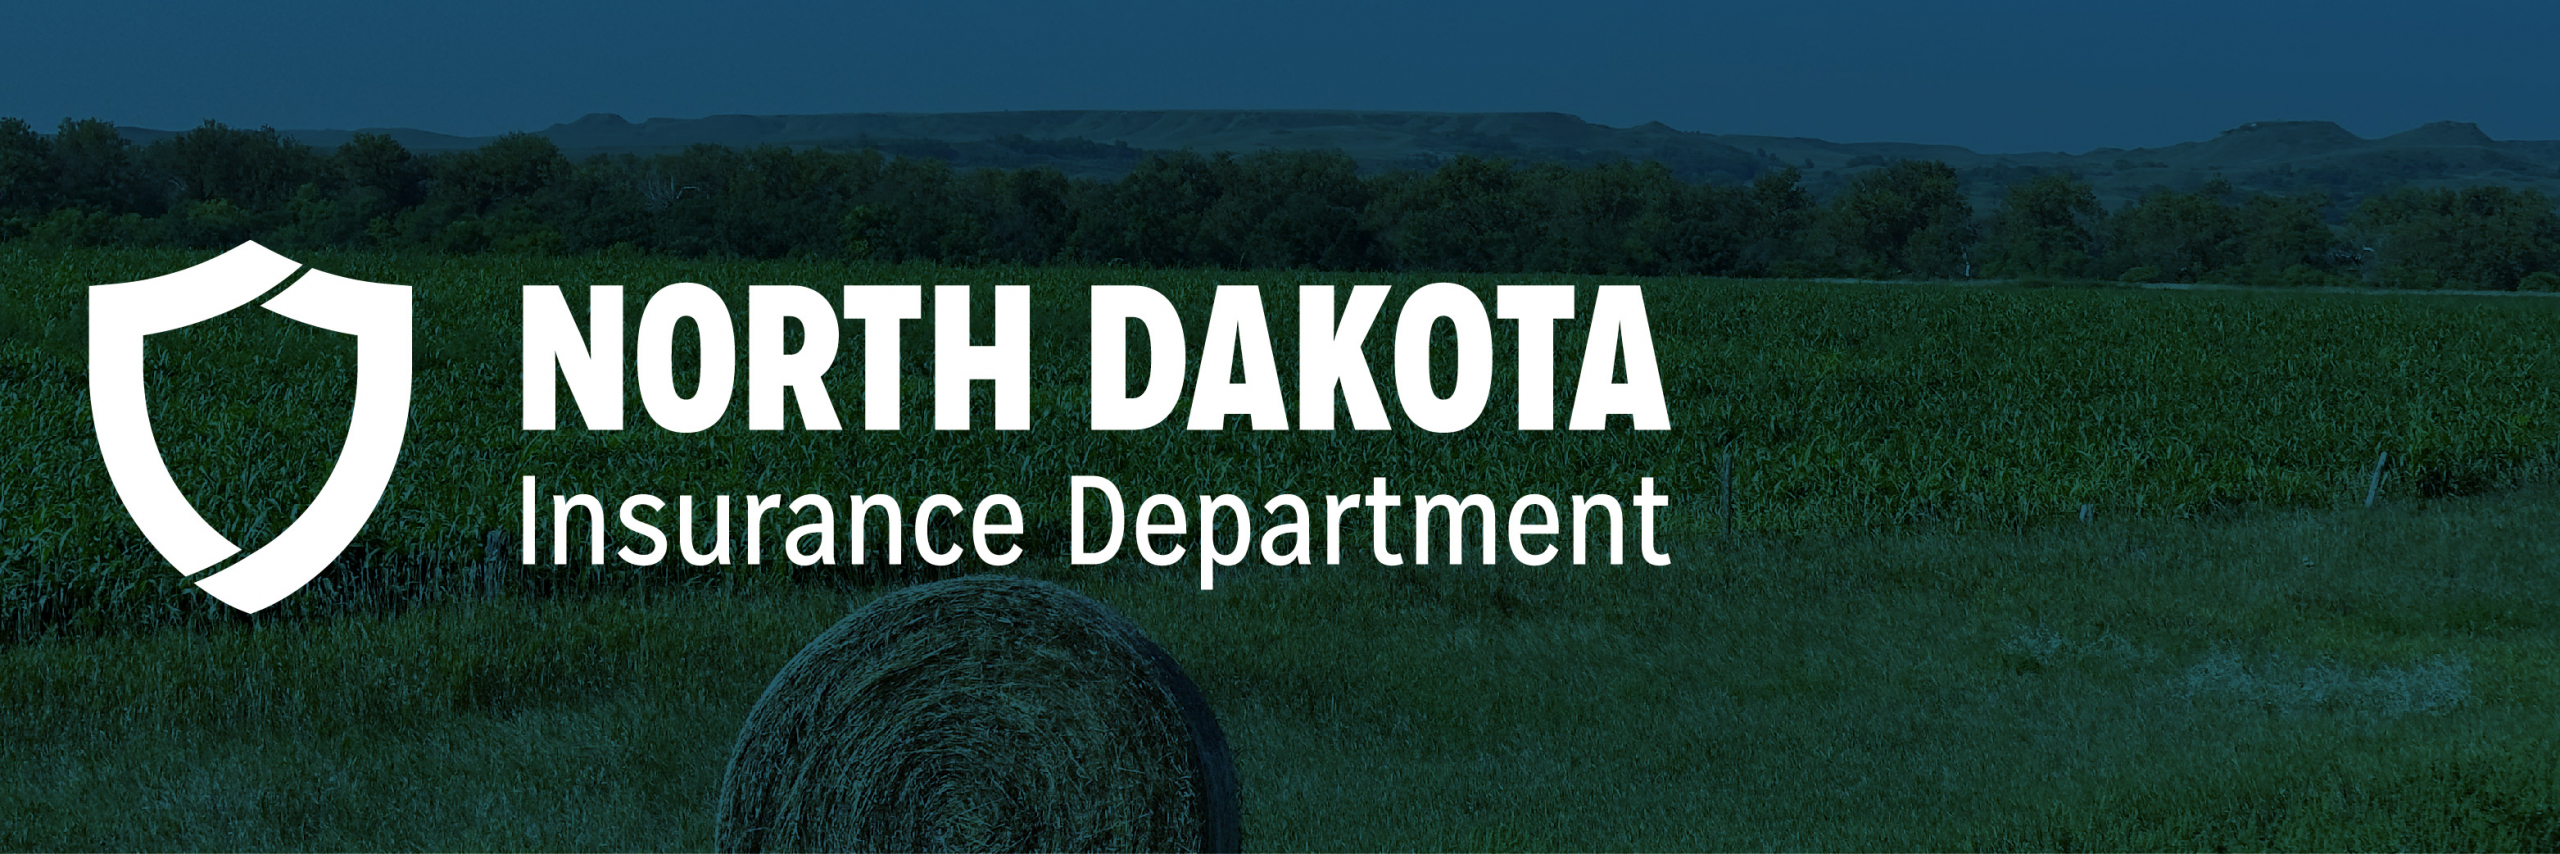 North Dakota Insurance Department